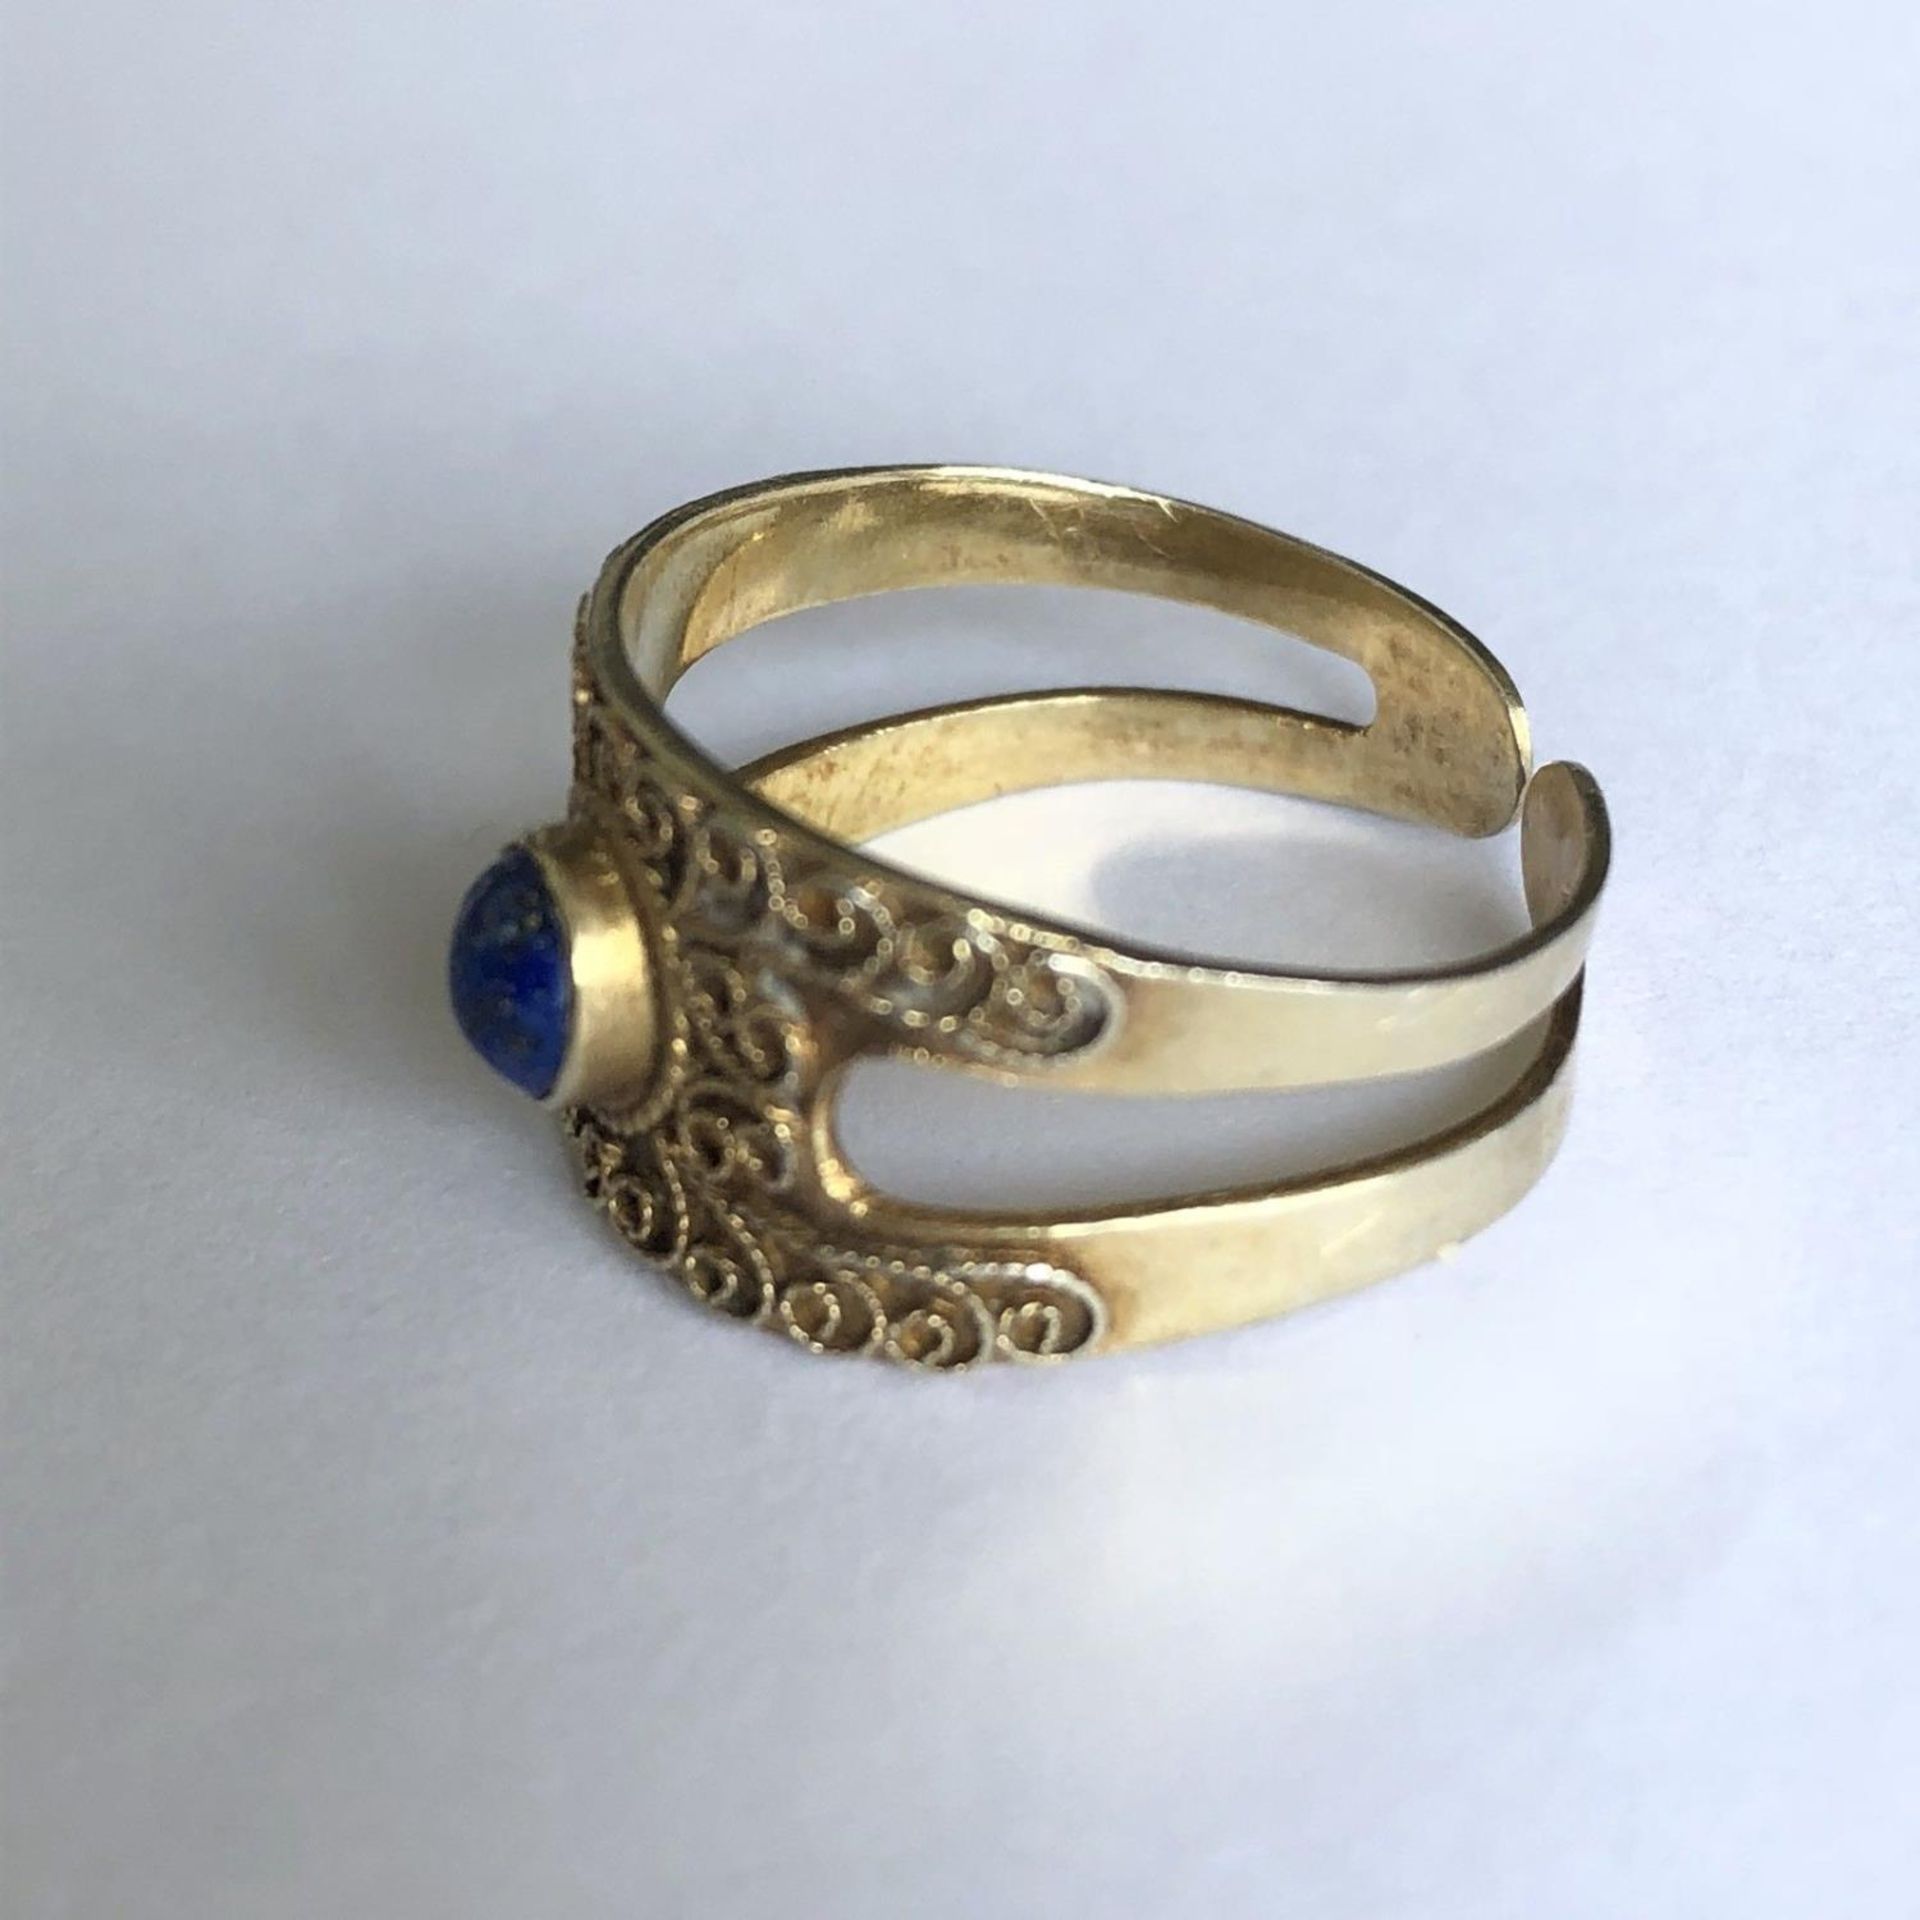 Vintage Silver adjustable cuff ring filigree detailing Blue Lapis Lazuli Stone - Image 2 of 3